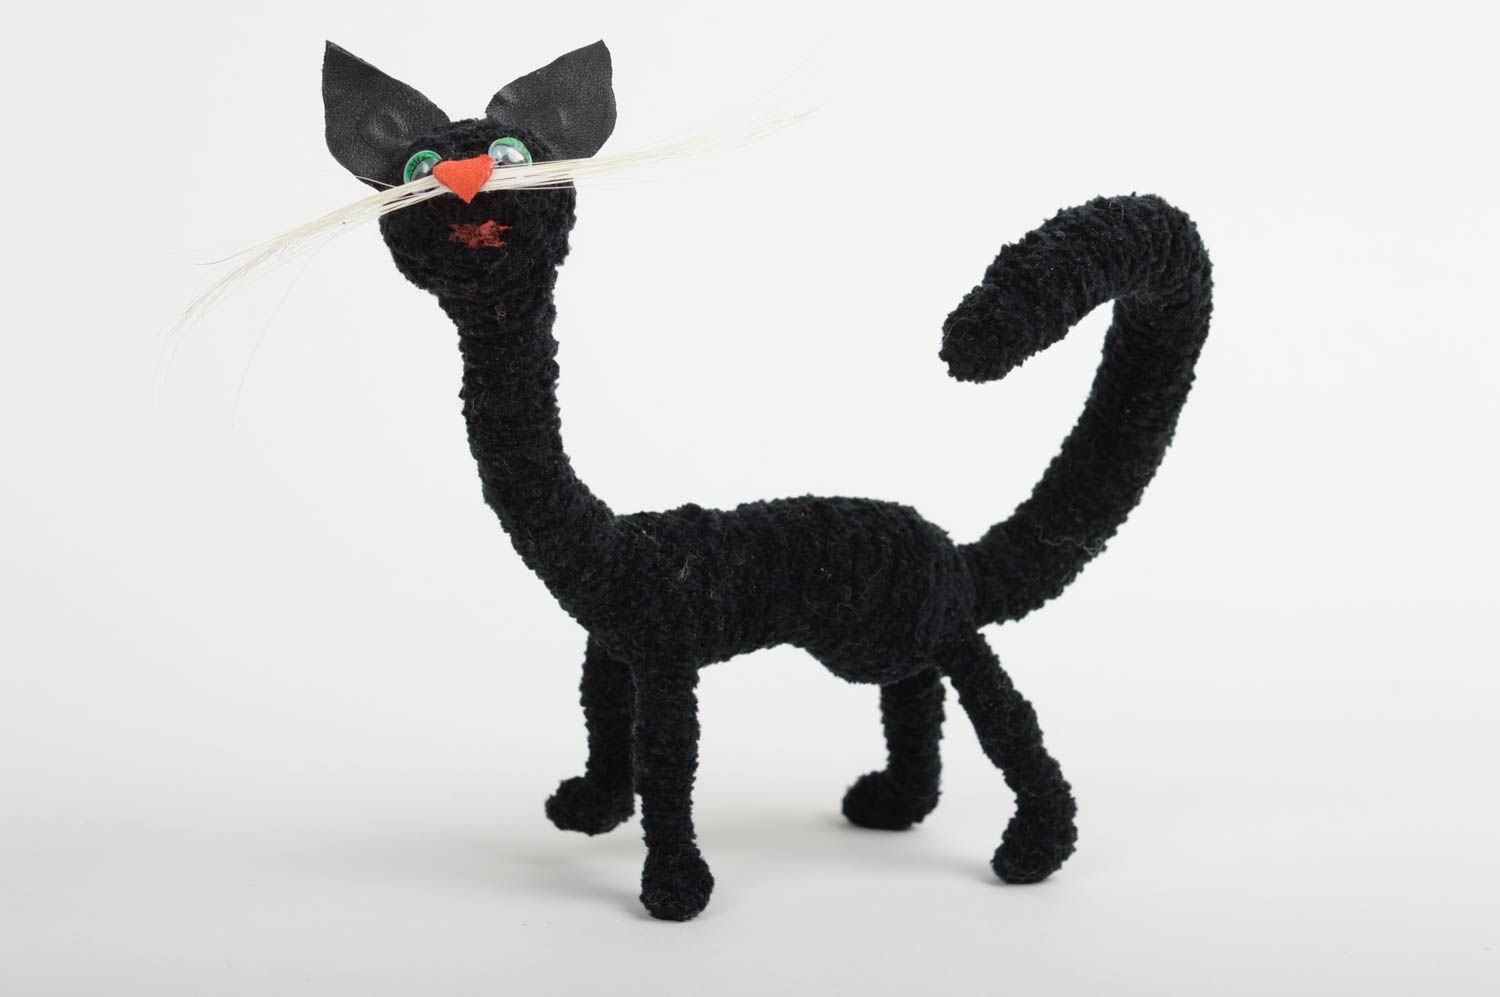 Handmade toy cat toy cat figurine nursery decor presents for kids home decor photo 1